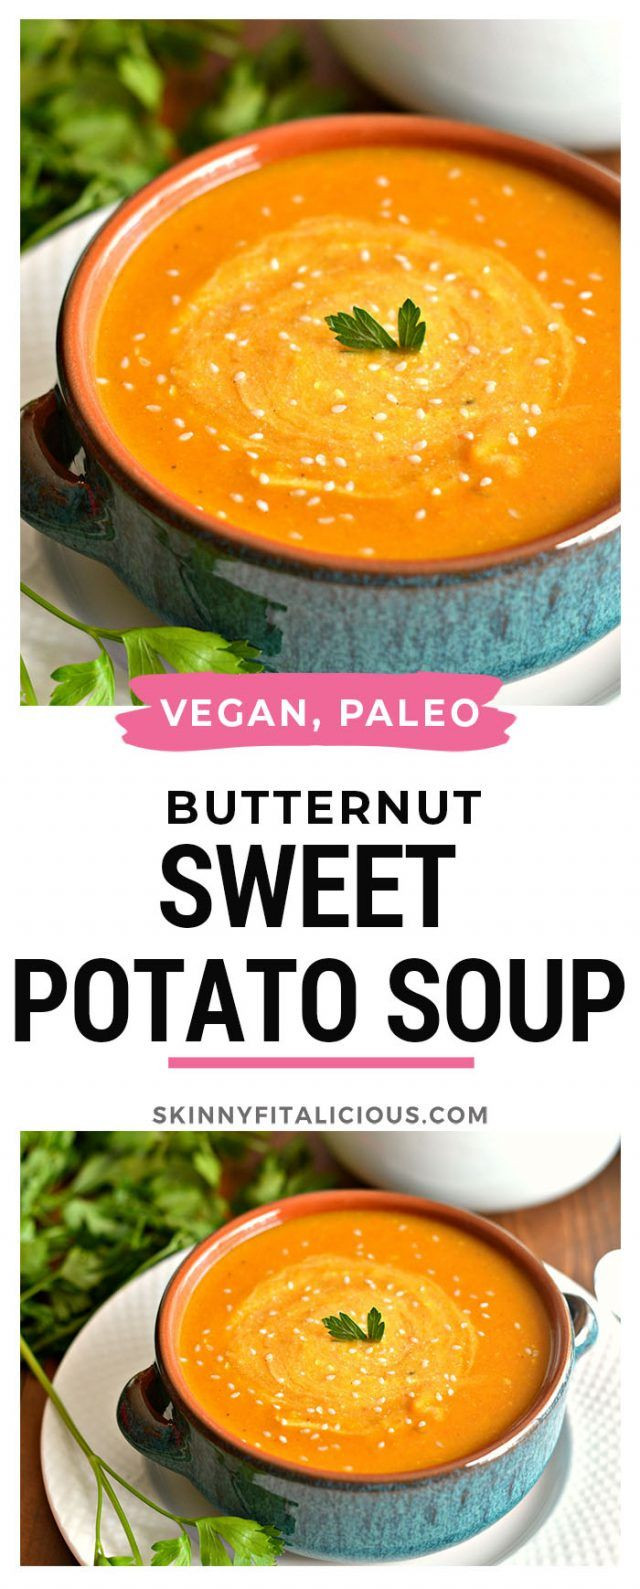 Low Calorie Paleo Recipes
 Butternut Sweet Potato Soup GF Paleo Vegan Low Cal